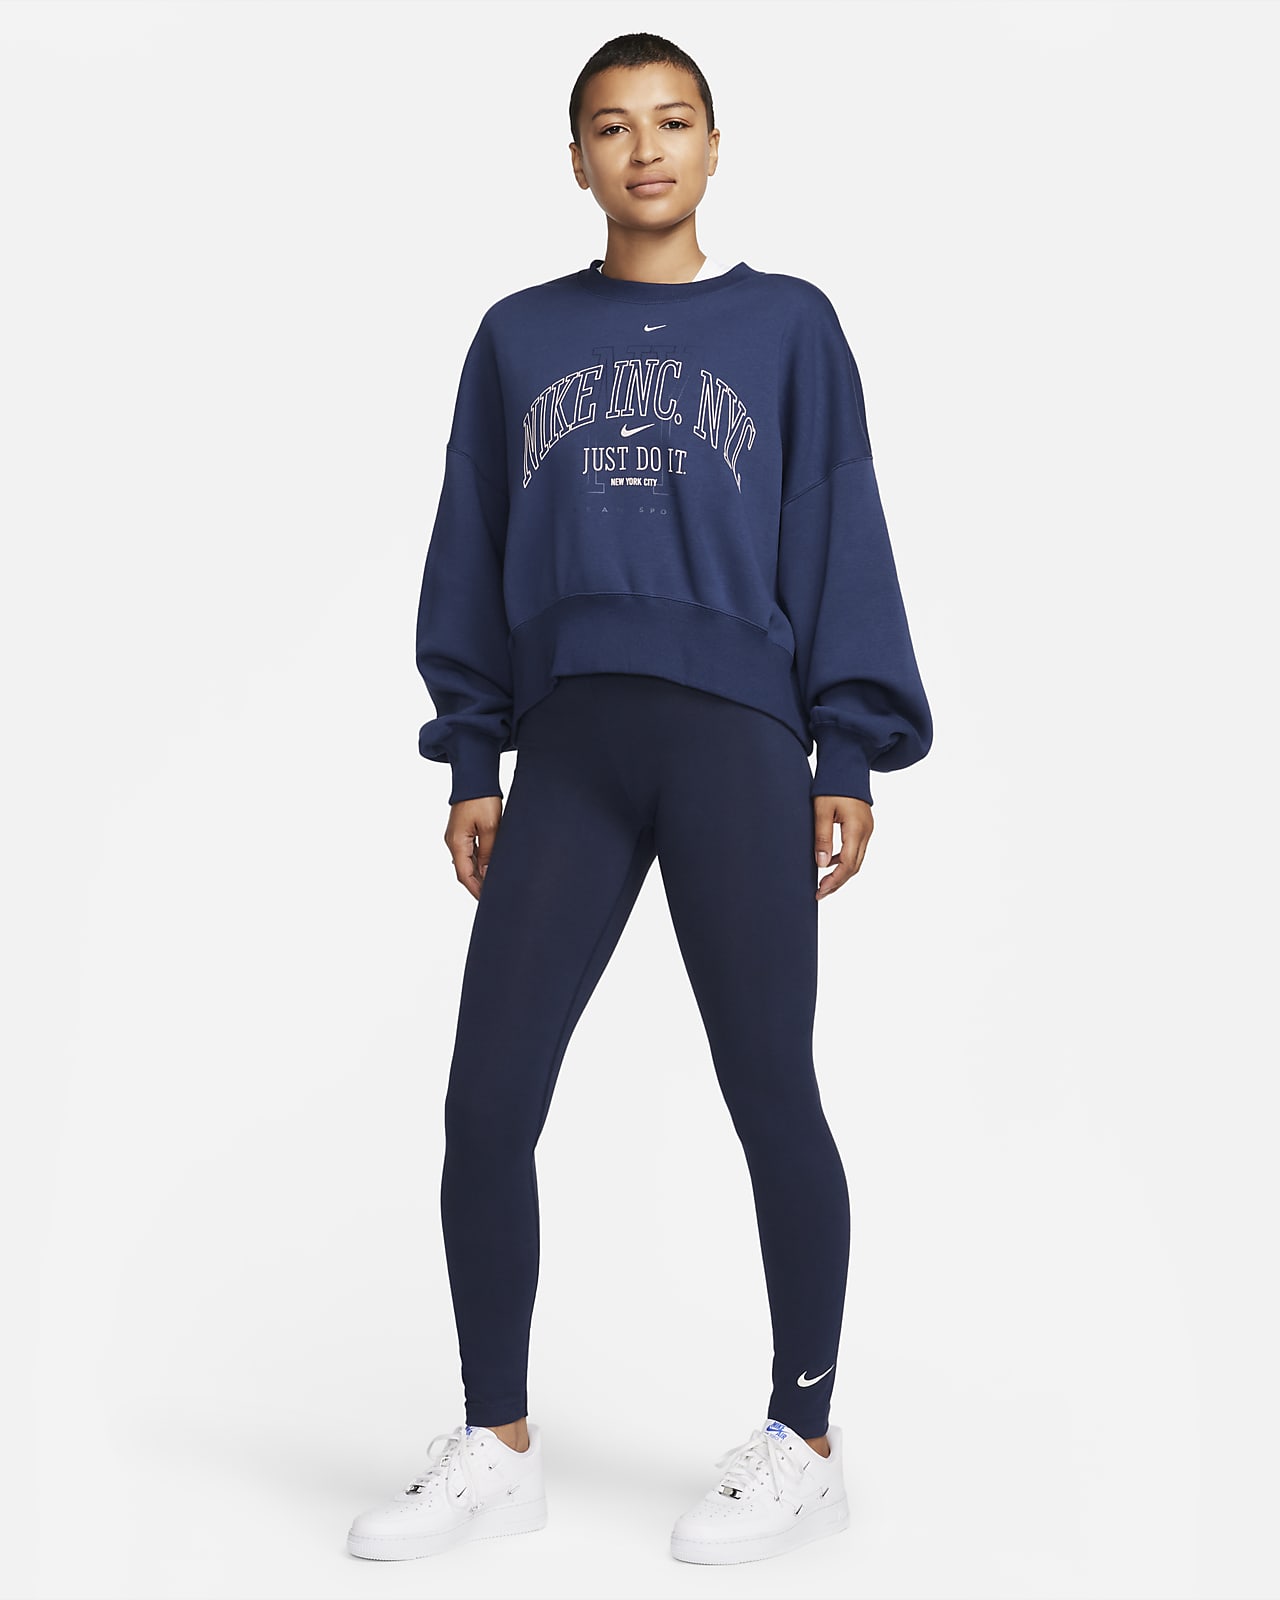 Nike Sportswear Women's High-Waisted Leggings. Nike.com